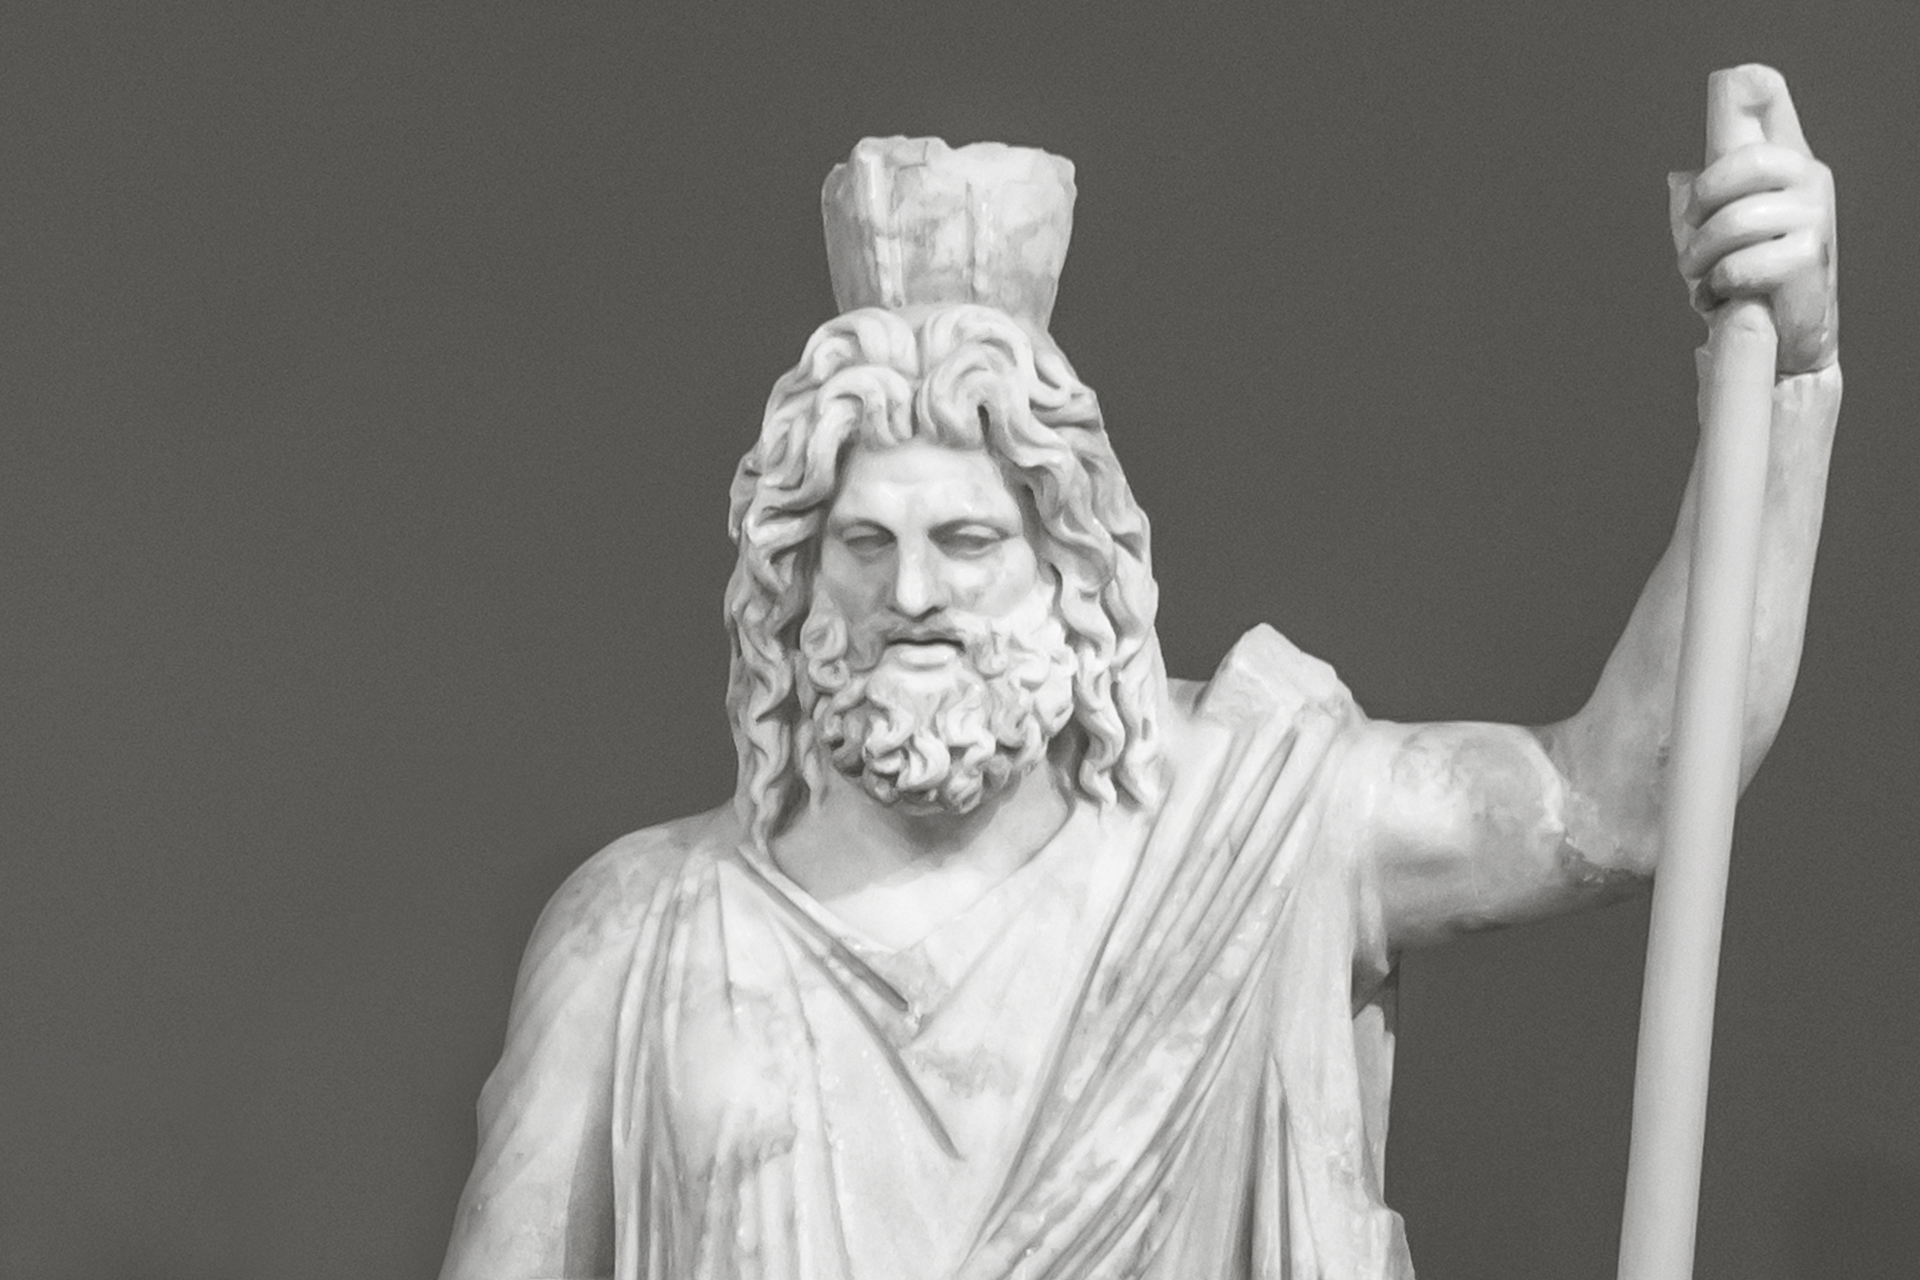 roman god pluto symbols